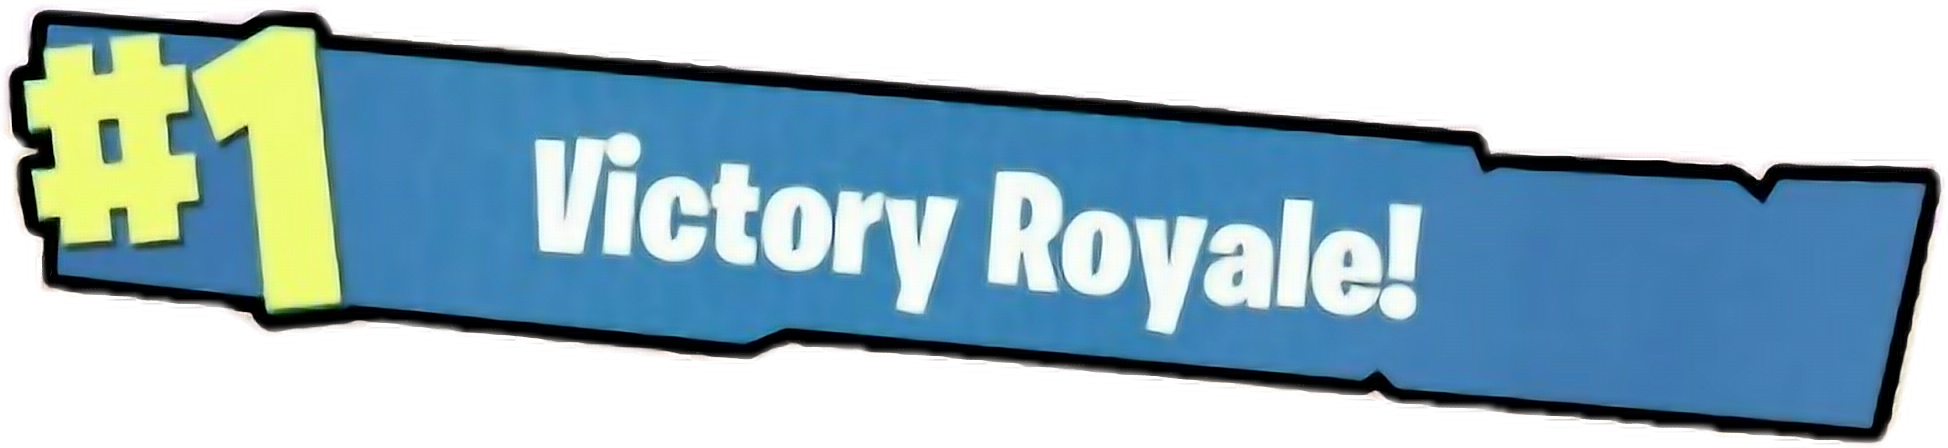 #1 Victory Battle Royale - Victory Royale Transparent Background (1948x448), Png Download